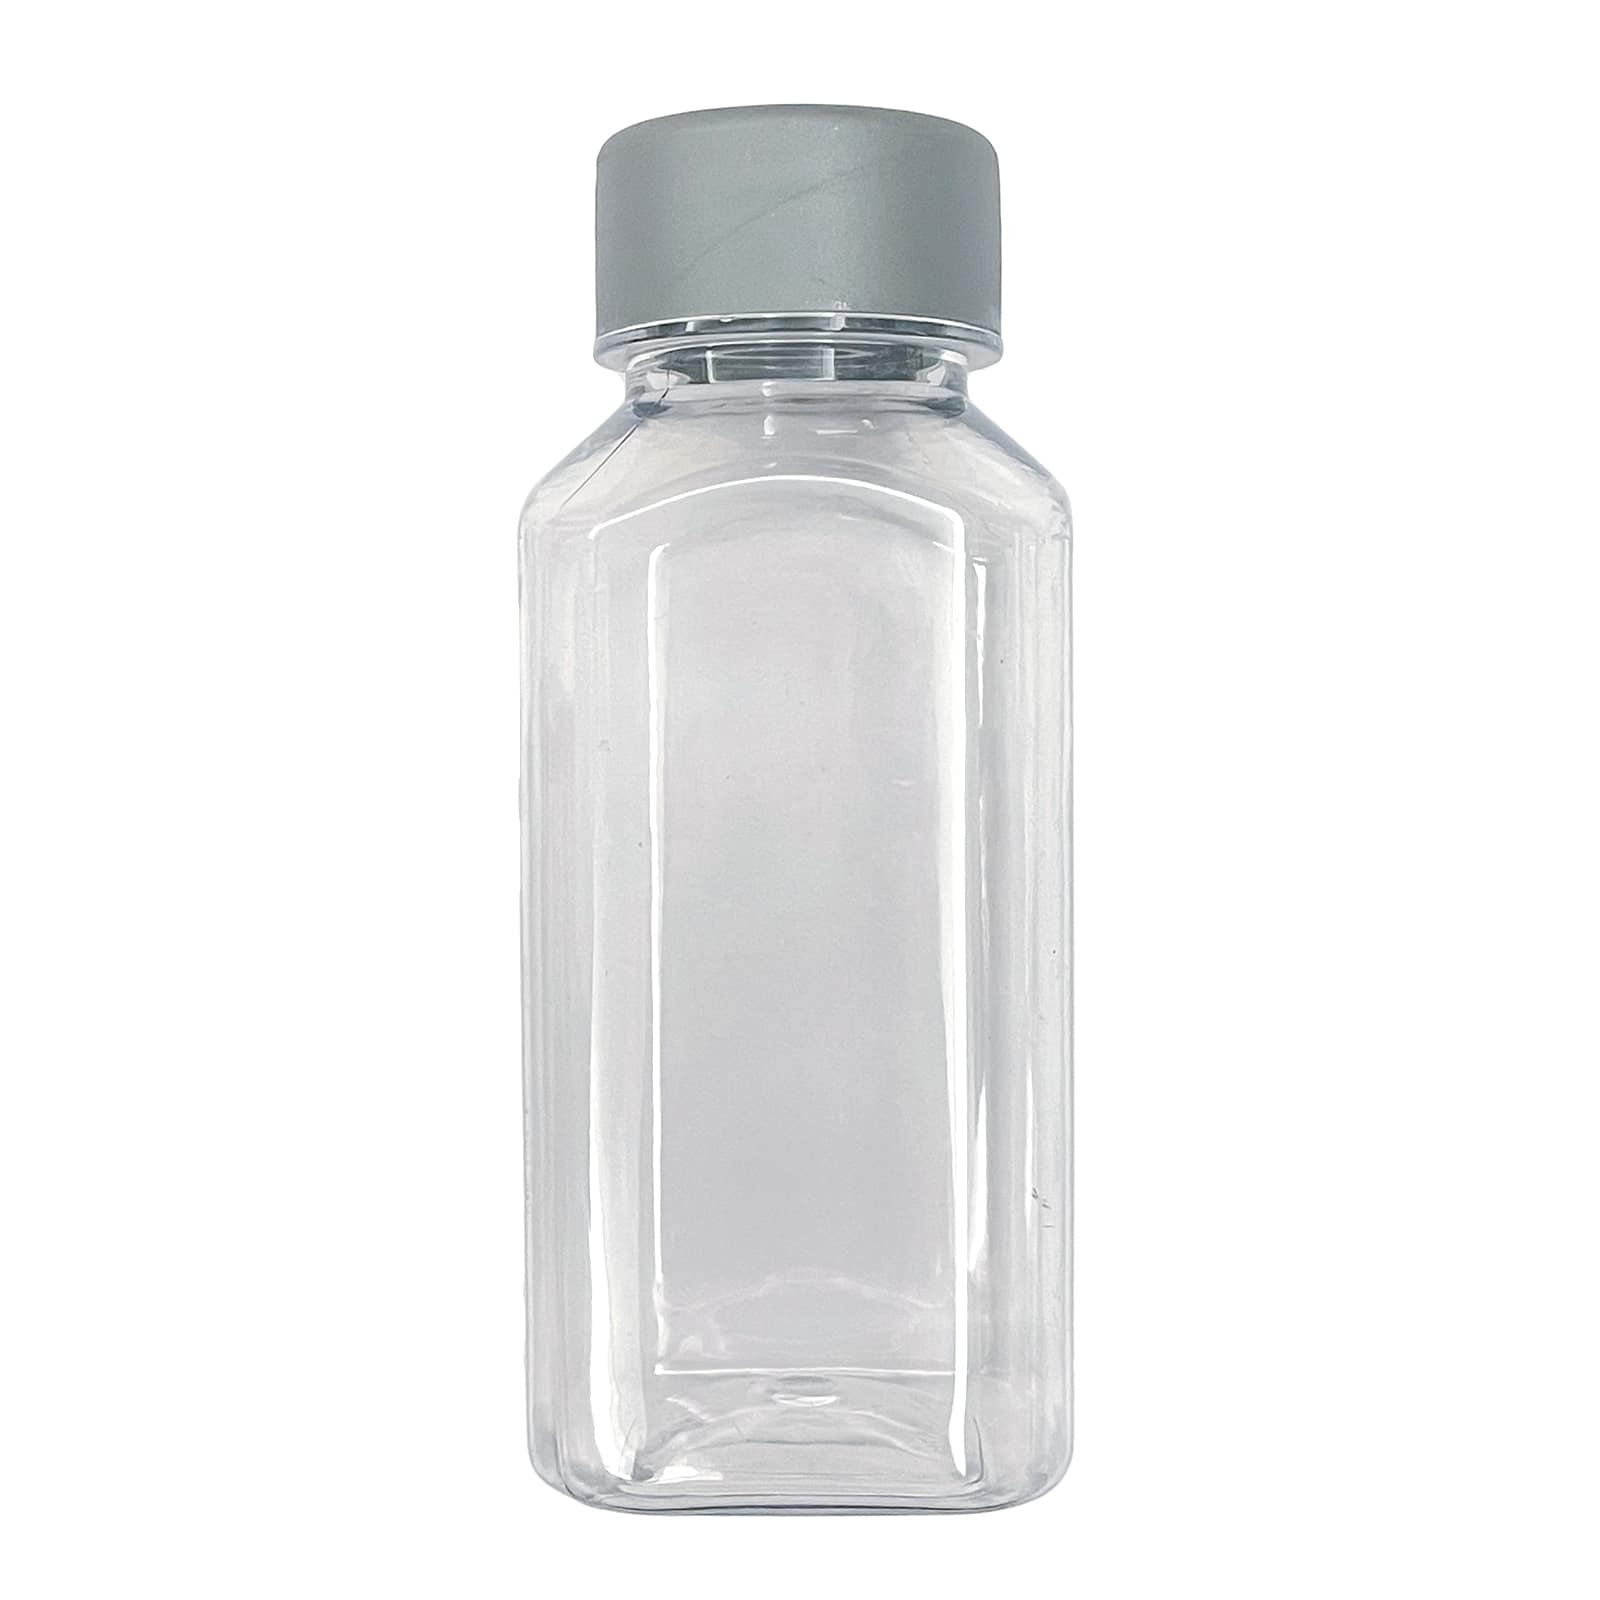 3 oz Square Clear Plastic Nostalgic Mason Jar - with Clamp Lid - 2 1/2 x 2 x 3 - 100 Count Box